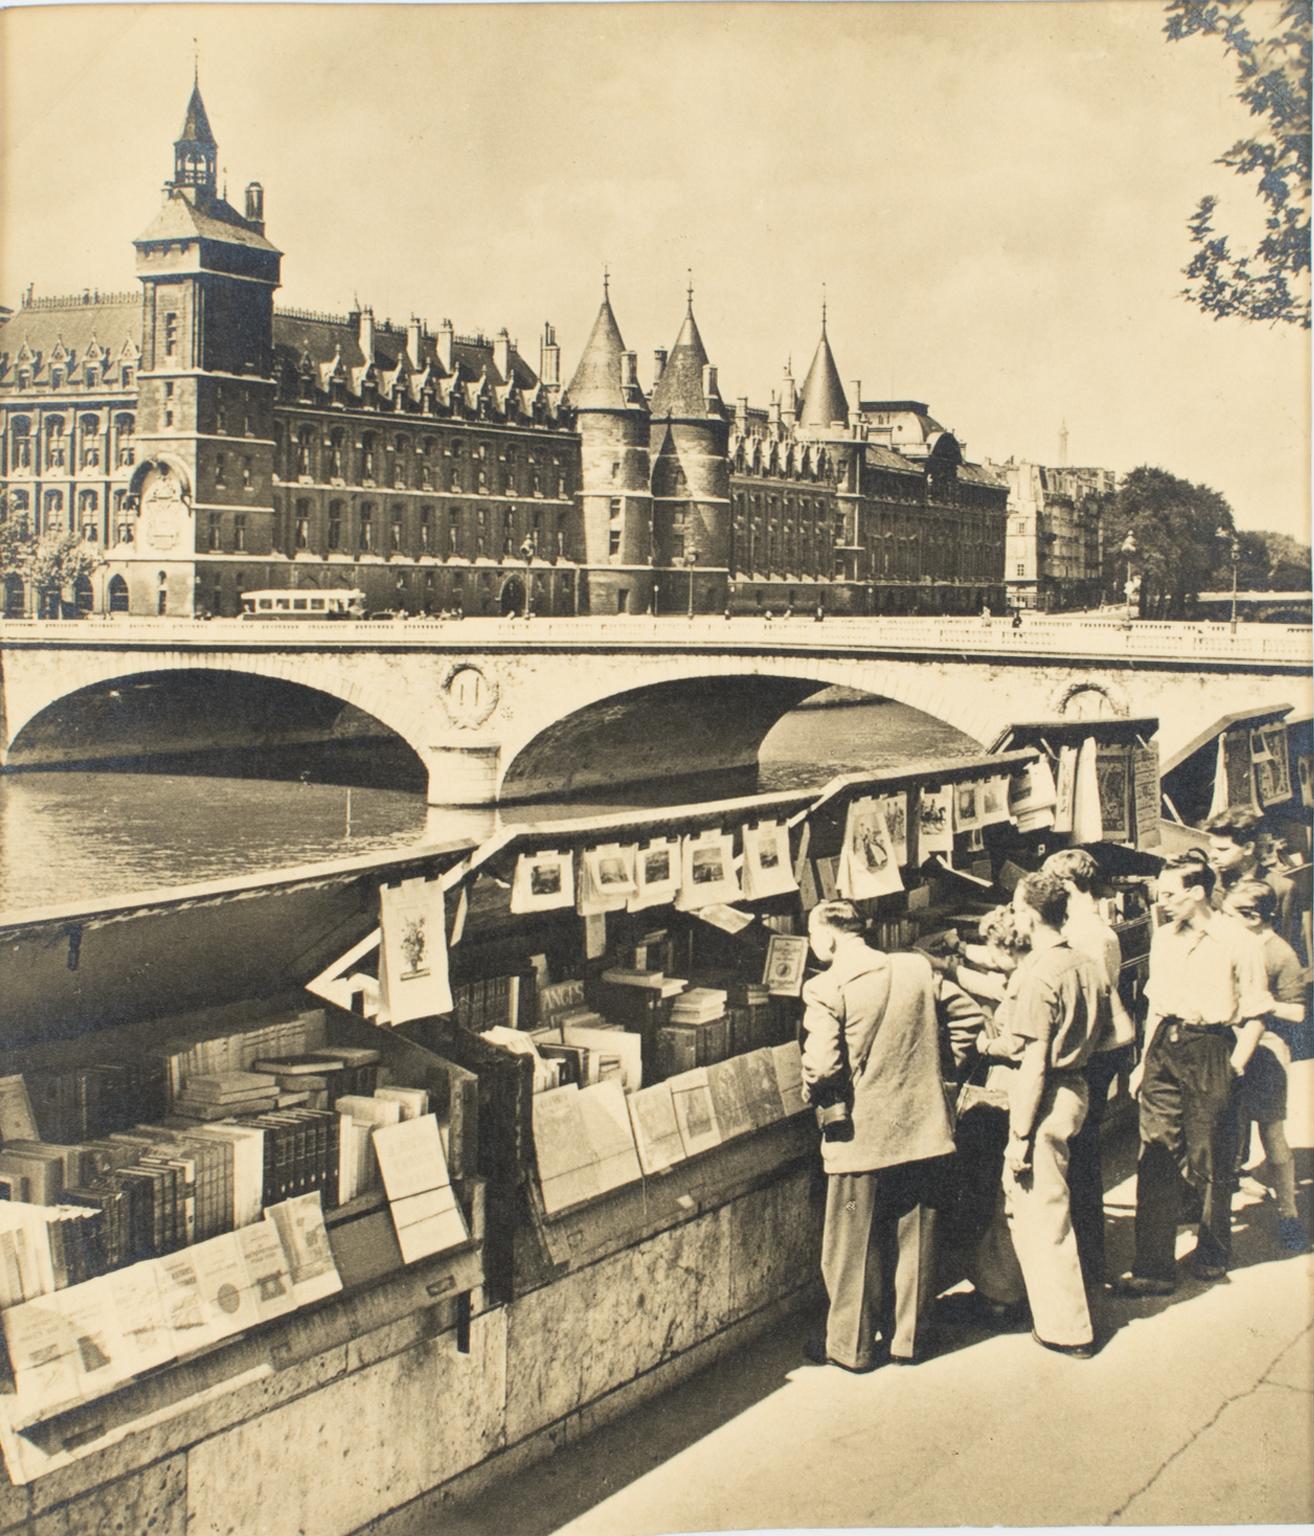 Albert Monier Landscape Photograph - Paris, The Riverbank Booksellers - Black and White Original Photography Postcard